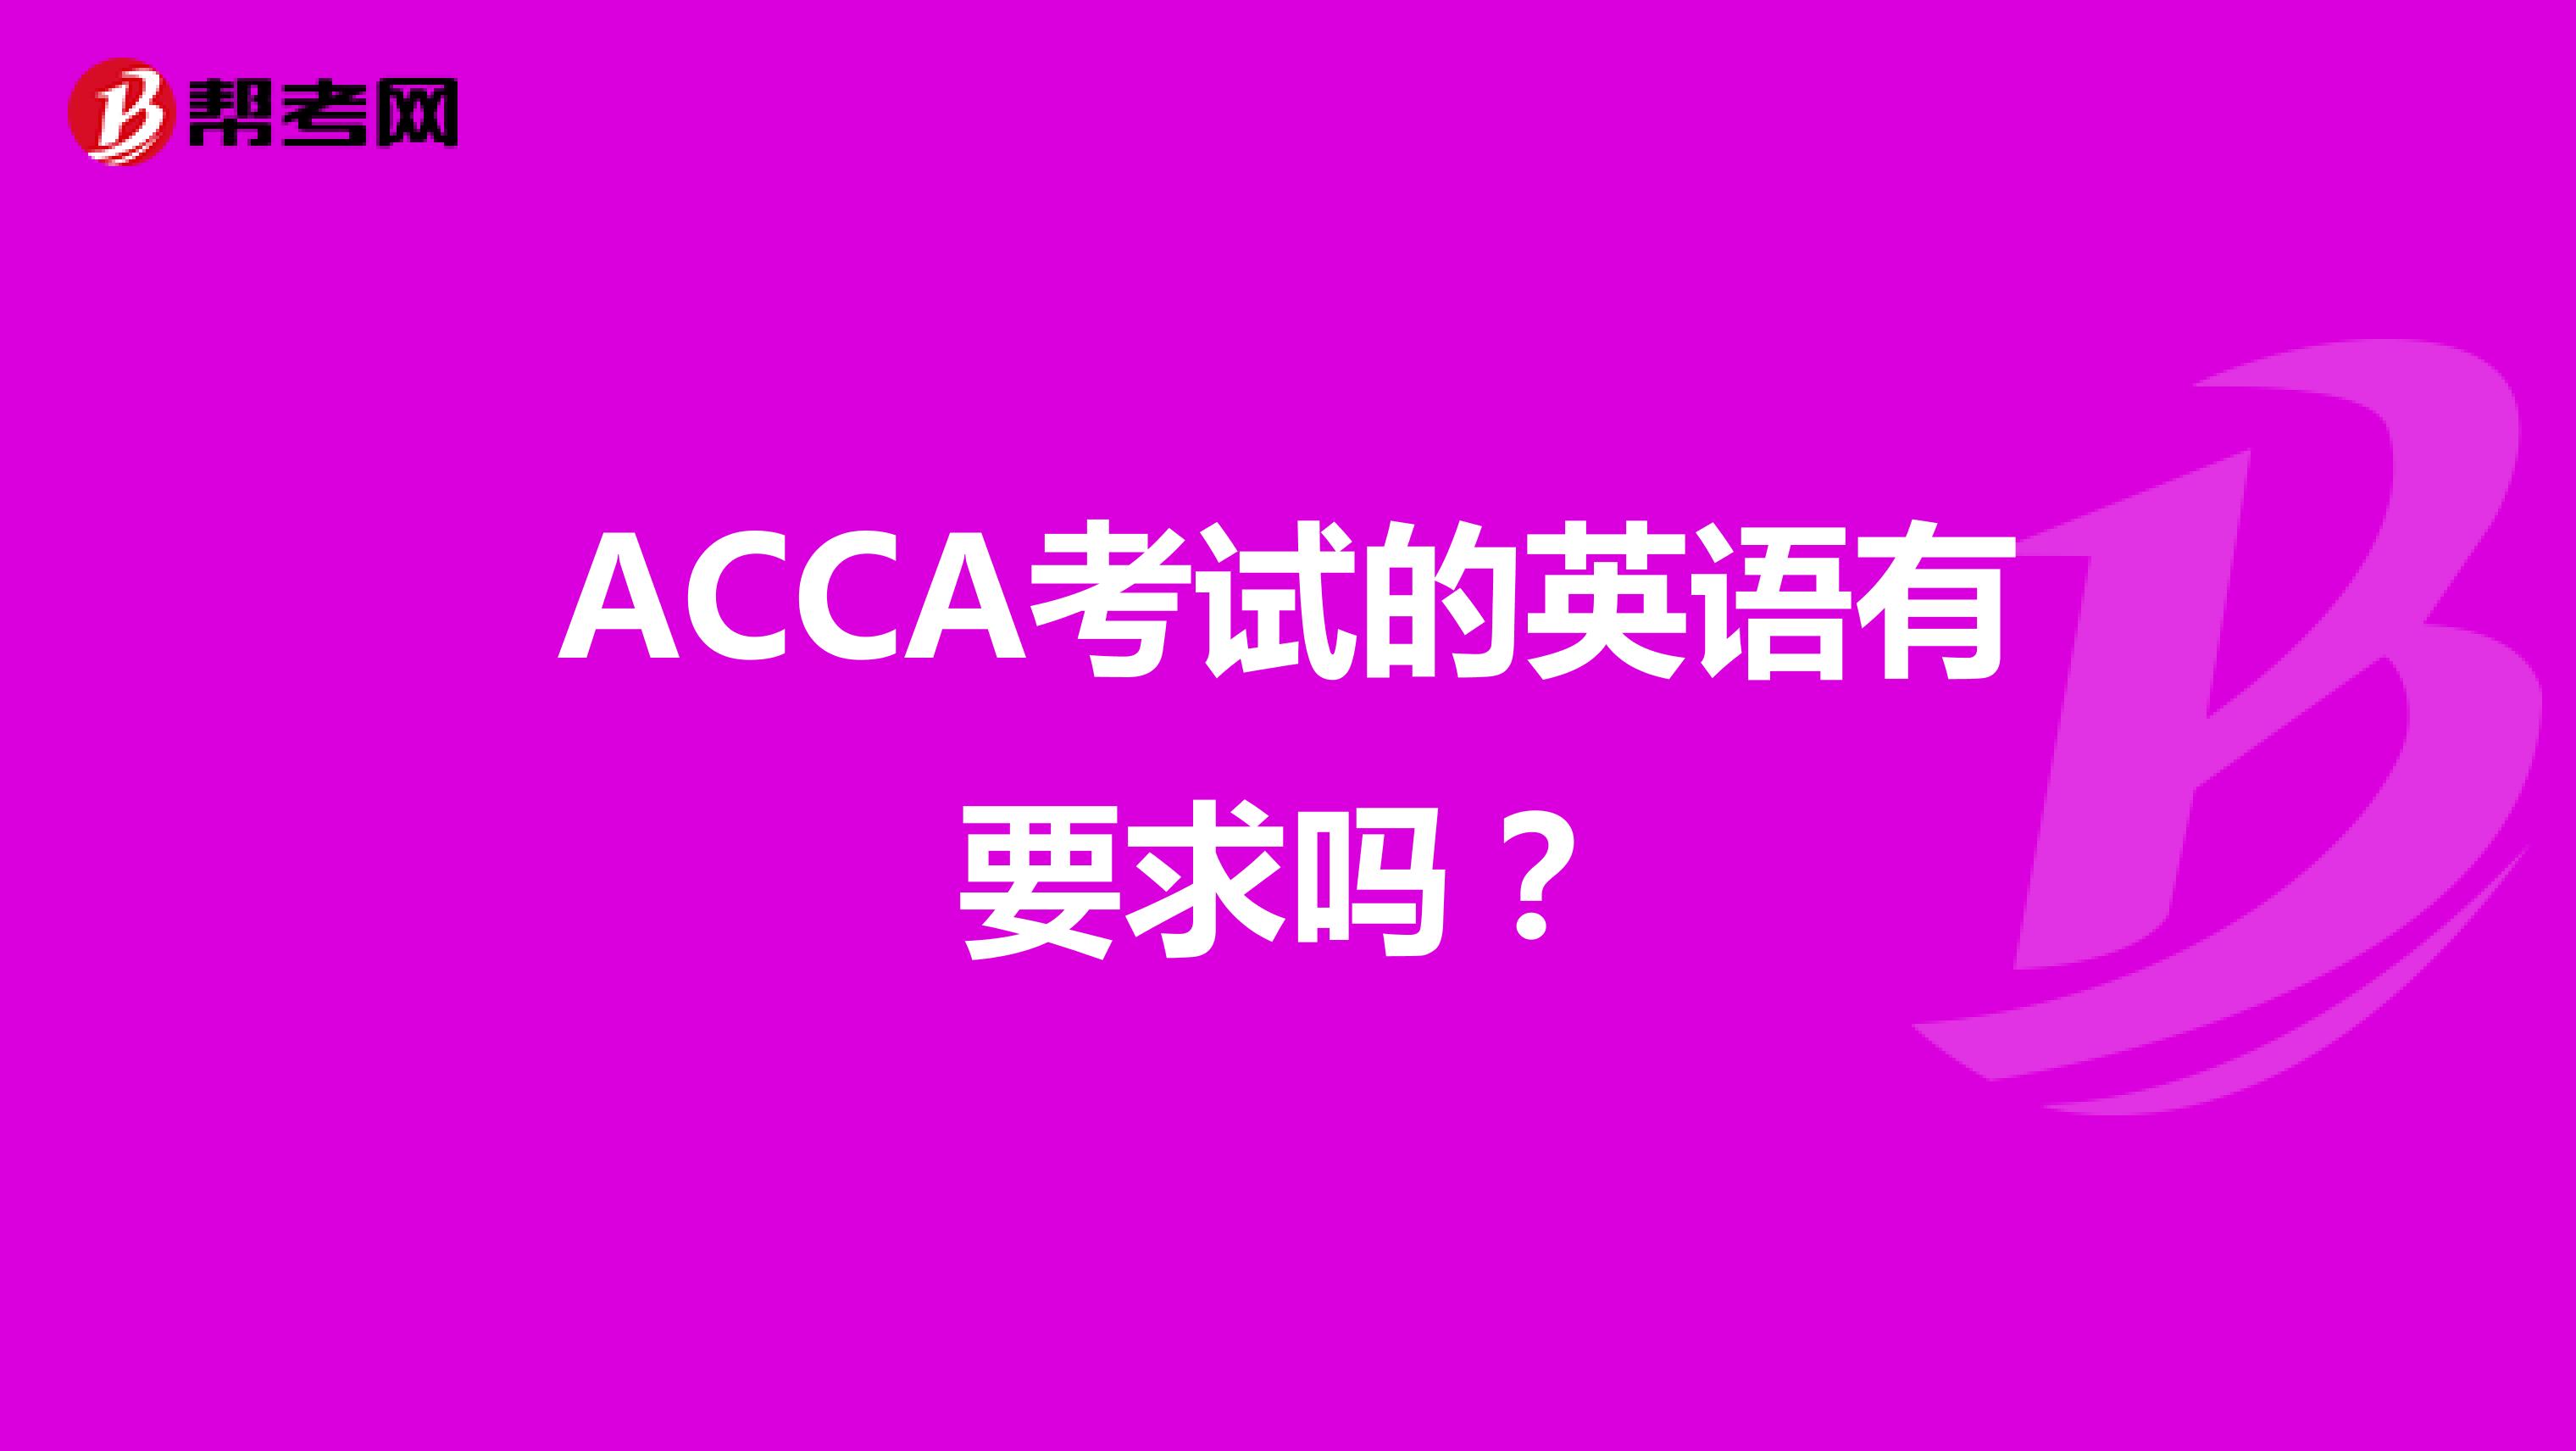 ACCA考试的英语有要求吗？